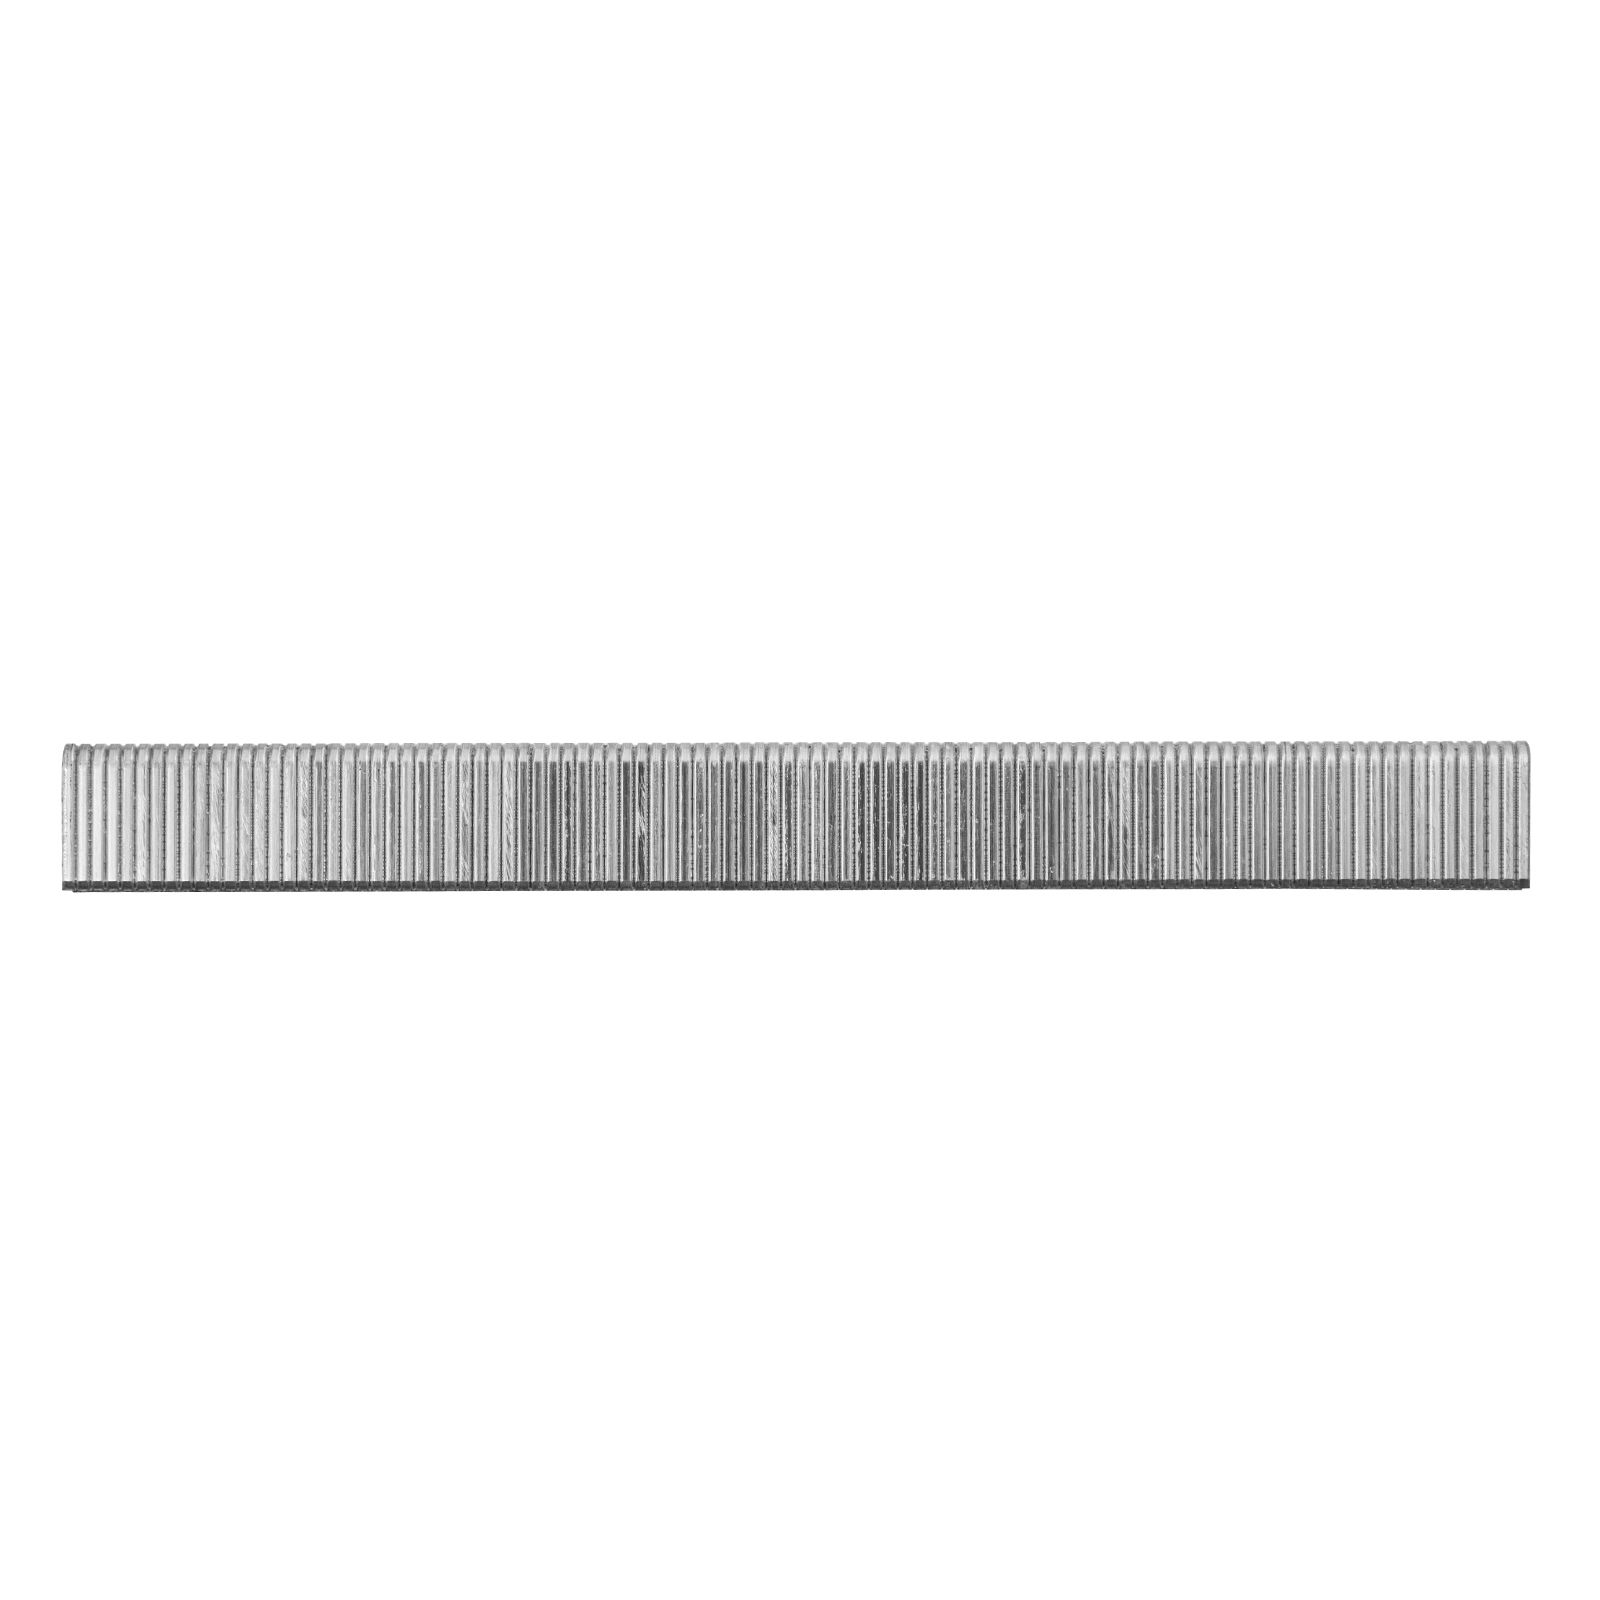 Скобы для пневматического степлера 18GA, 1.25 х 1 мм, длина 13 мм, ширина 5,7 мм, 5000 шт Matrix 